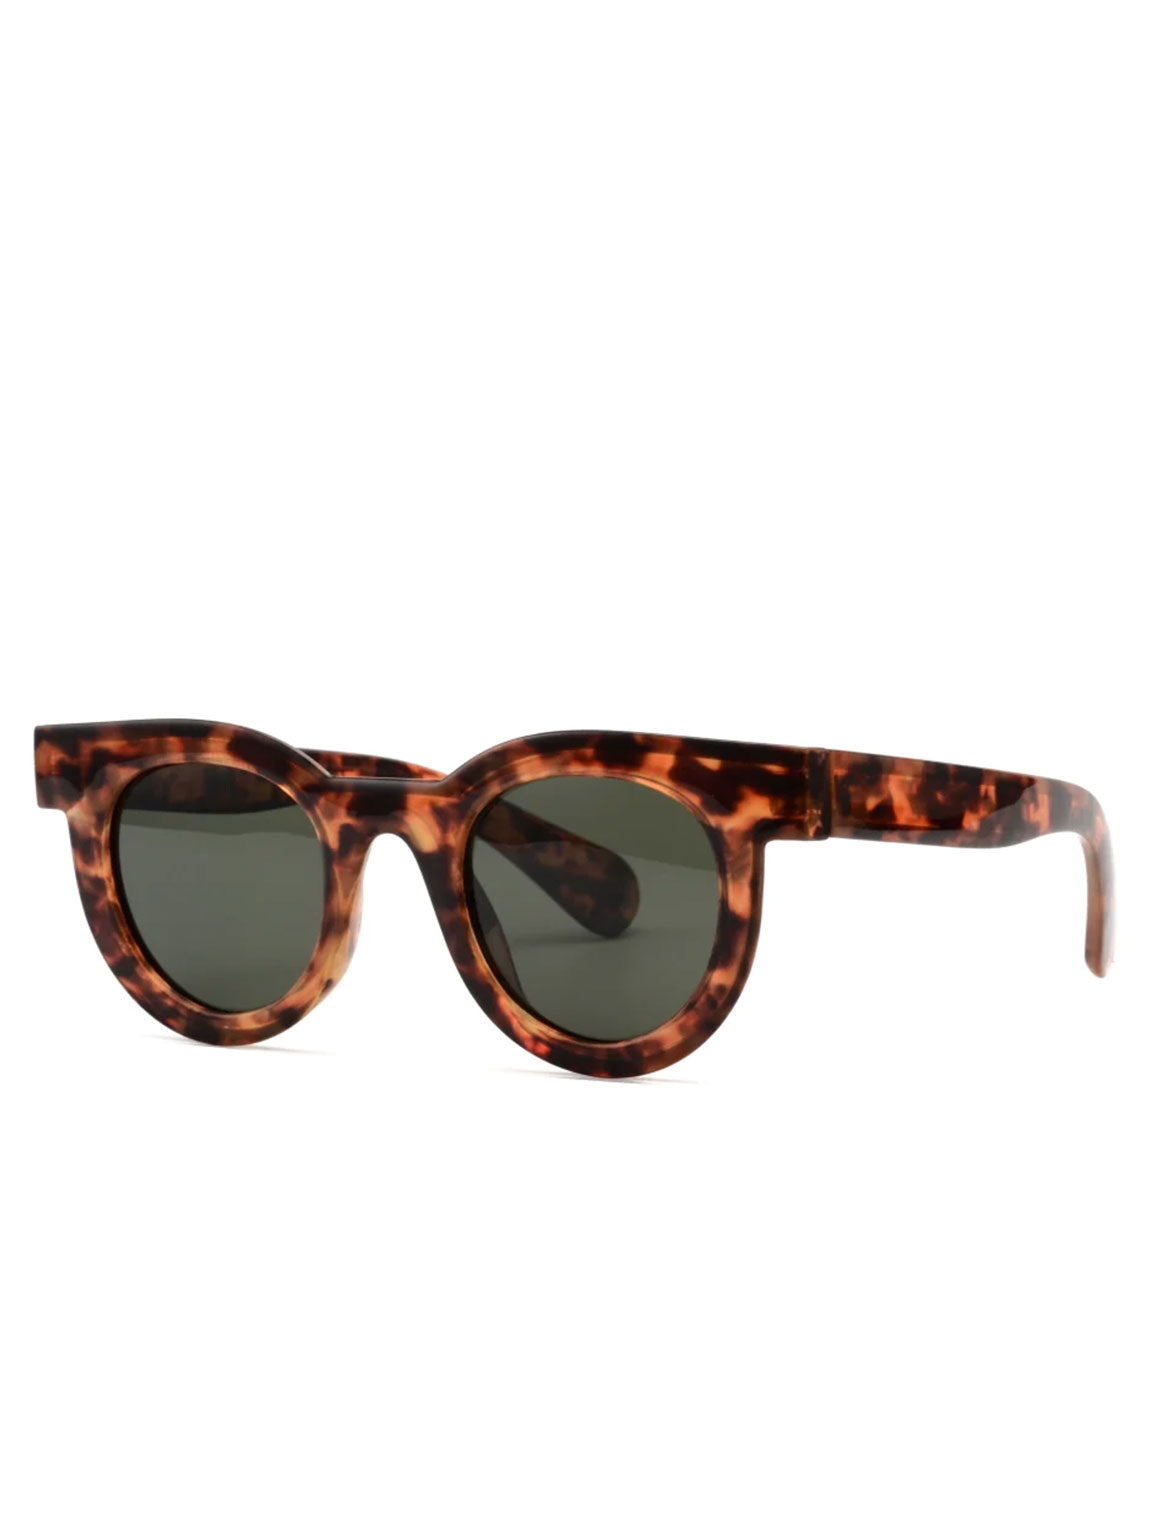 MILO | Polarized Sunglasses | Tortoise / Green Lens